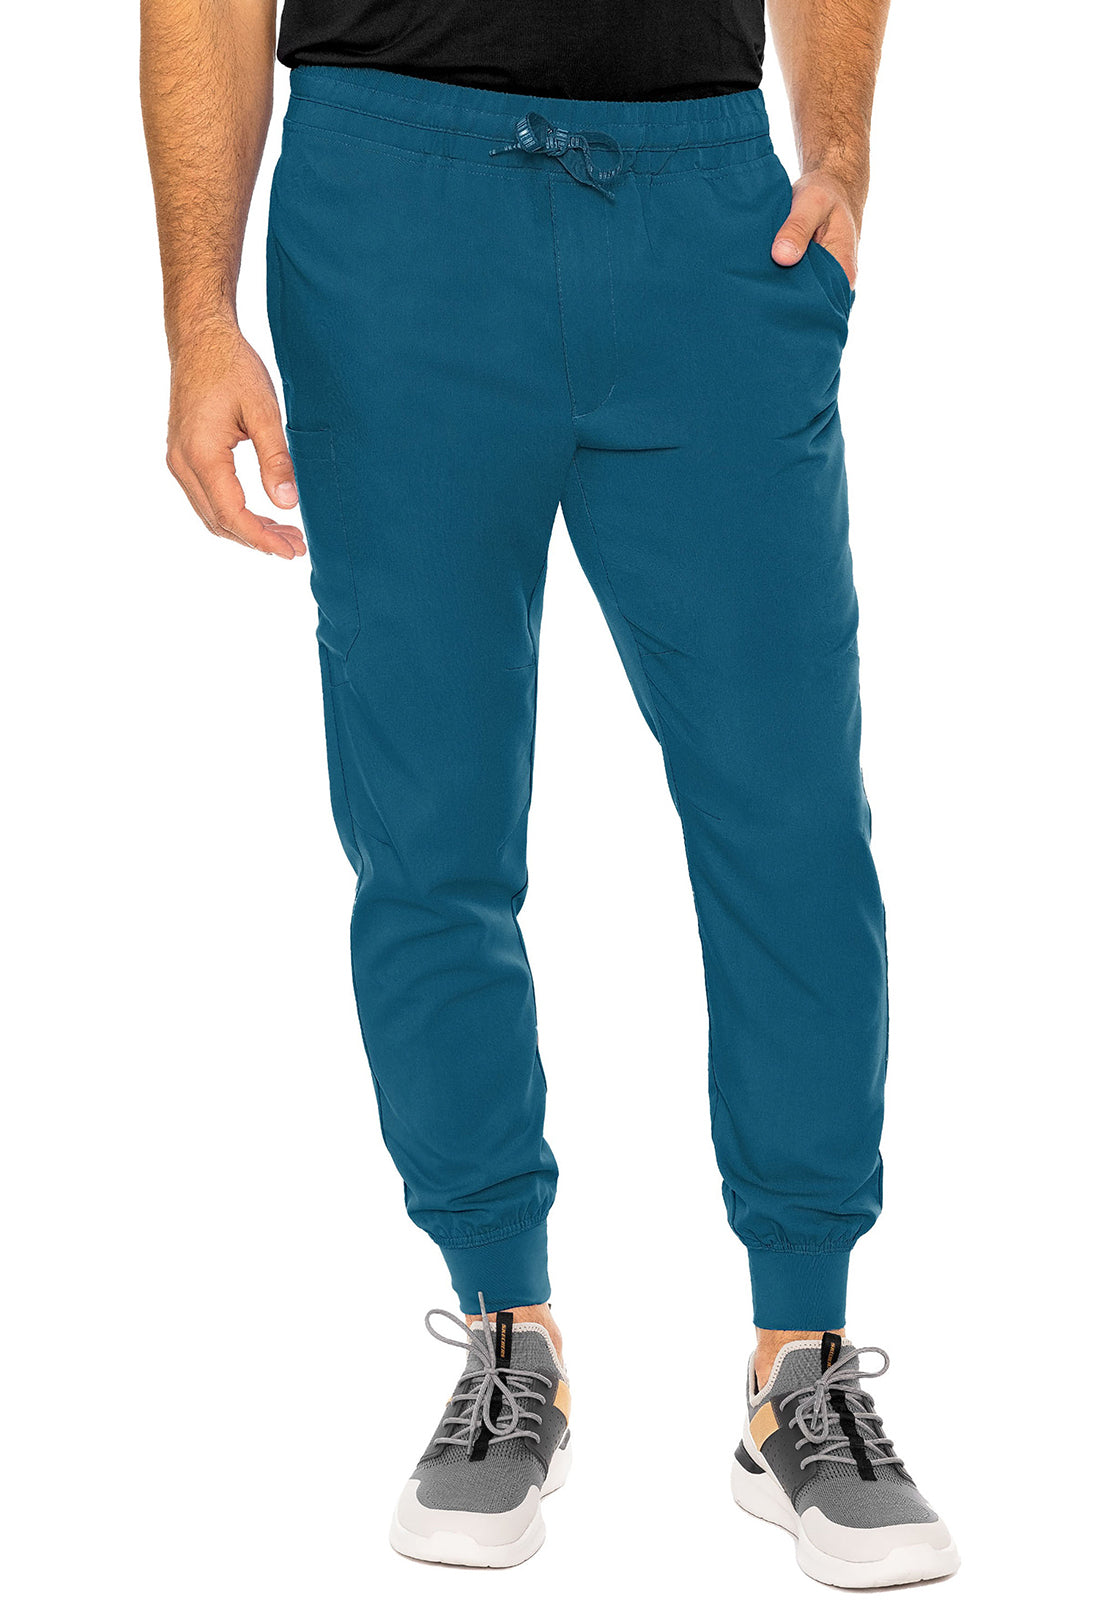 Tall Rothwear Pant - Men's Bowen Jogger Scrub Pant Men's Tall Scrub Pant Rothwear Caribbean Blue XS 